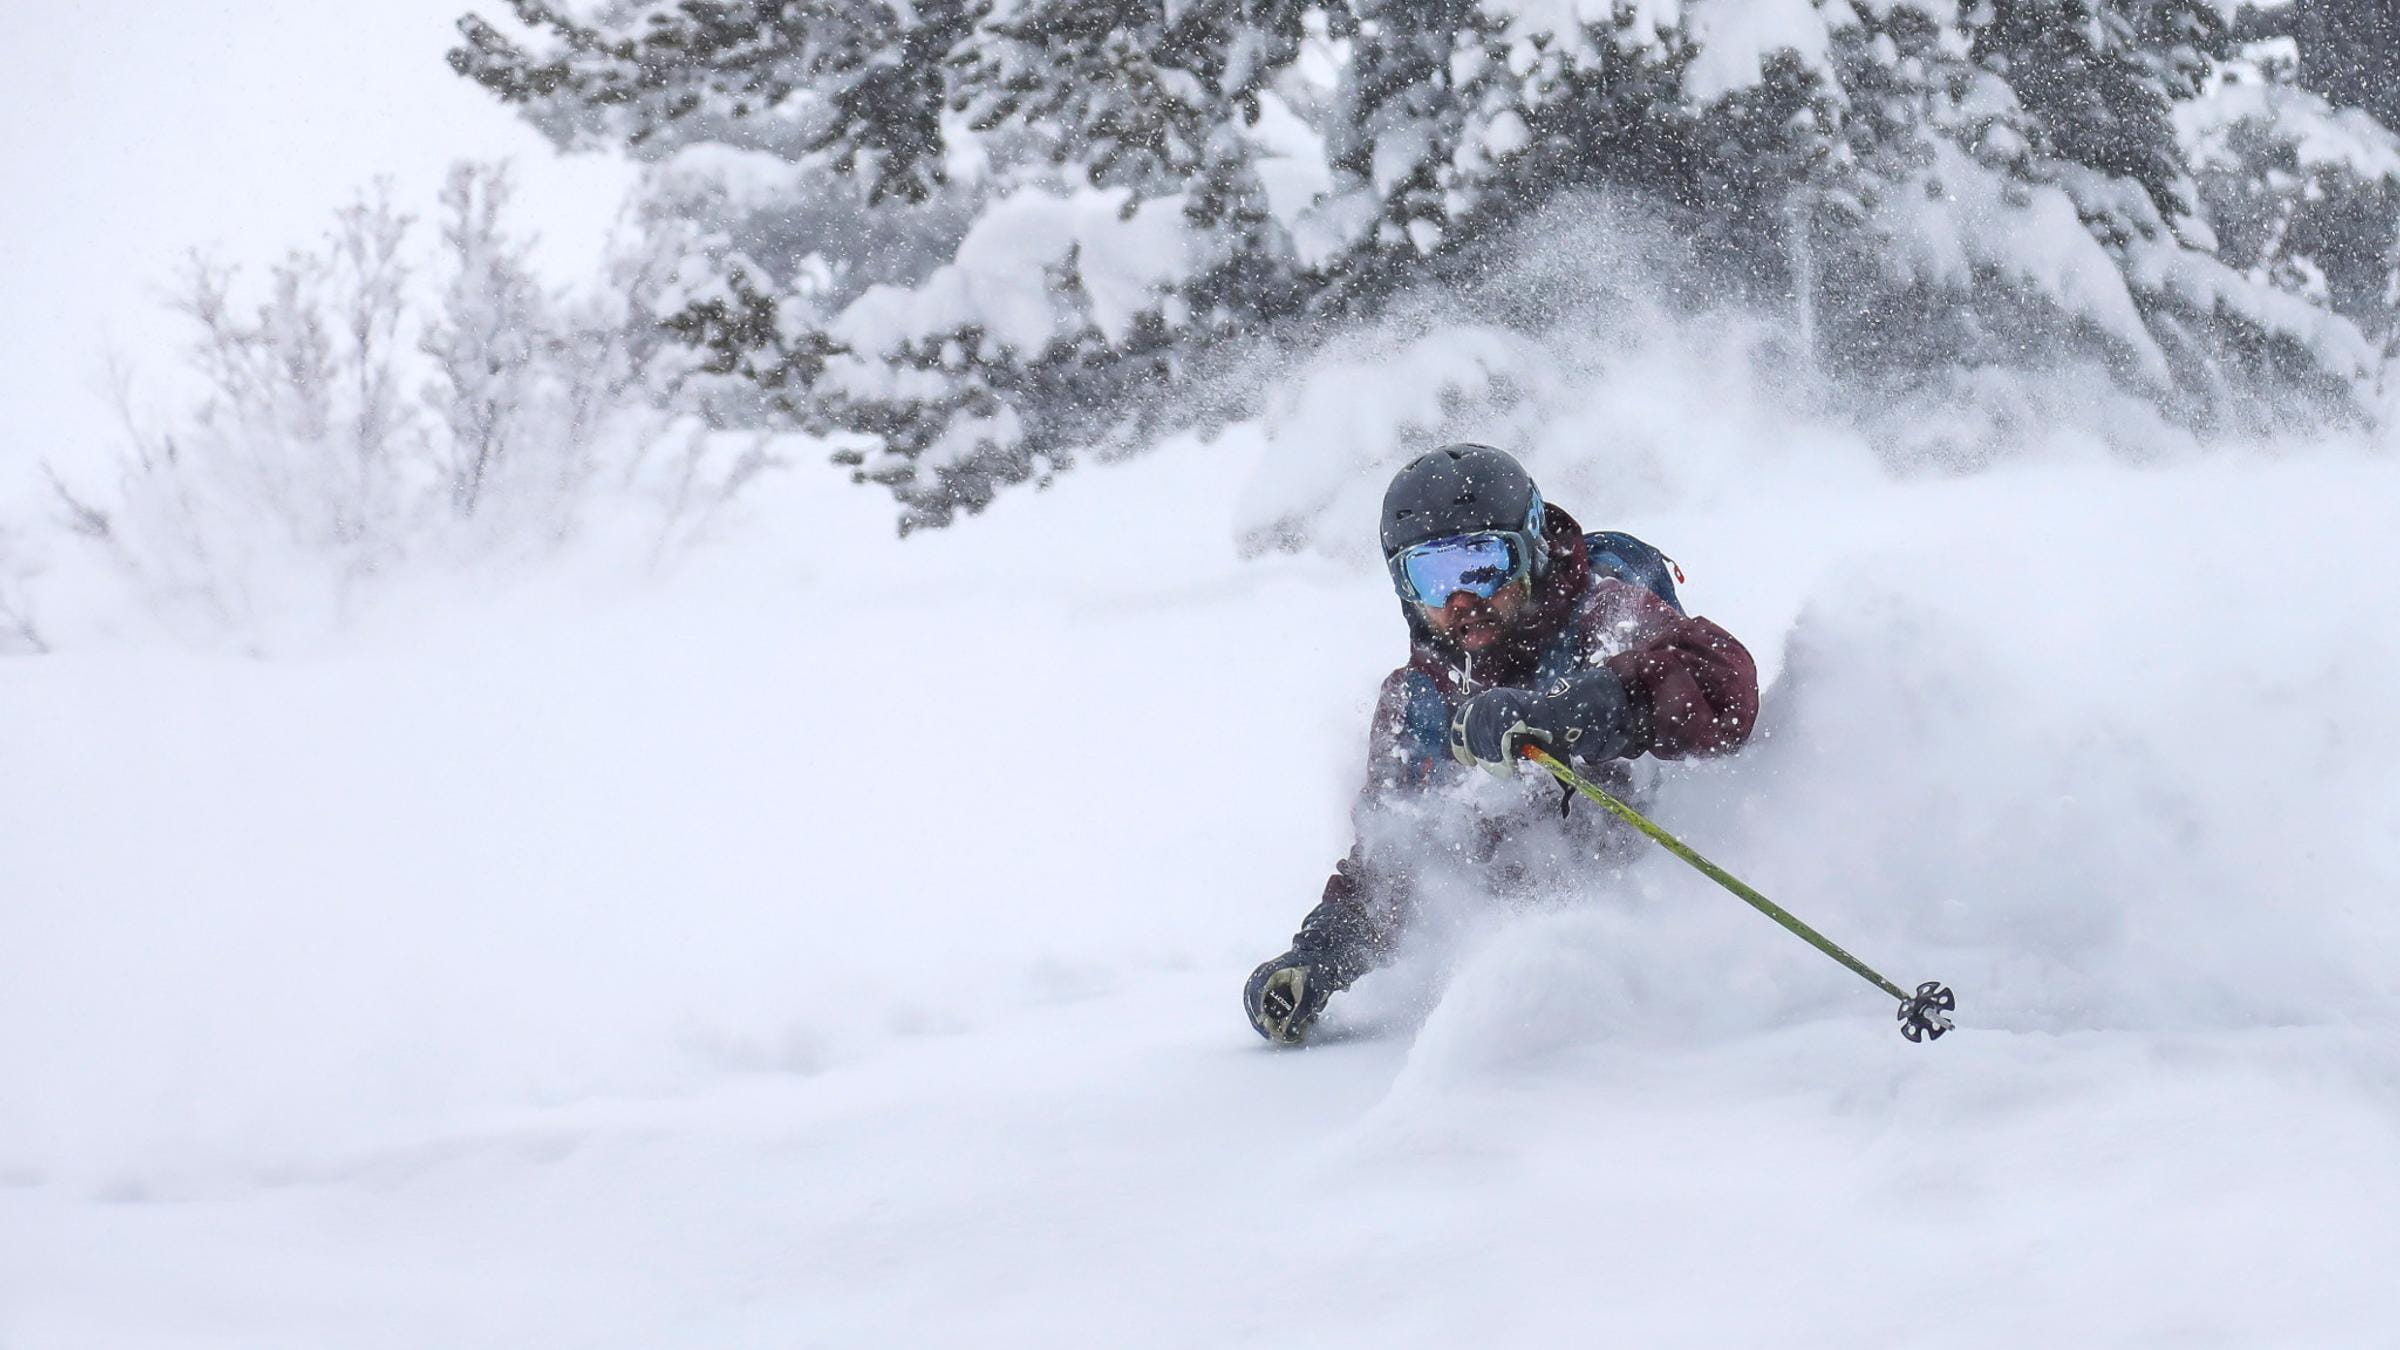 Skier enjoys deep powder day